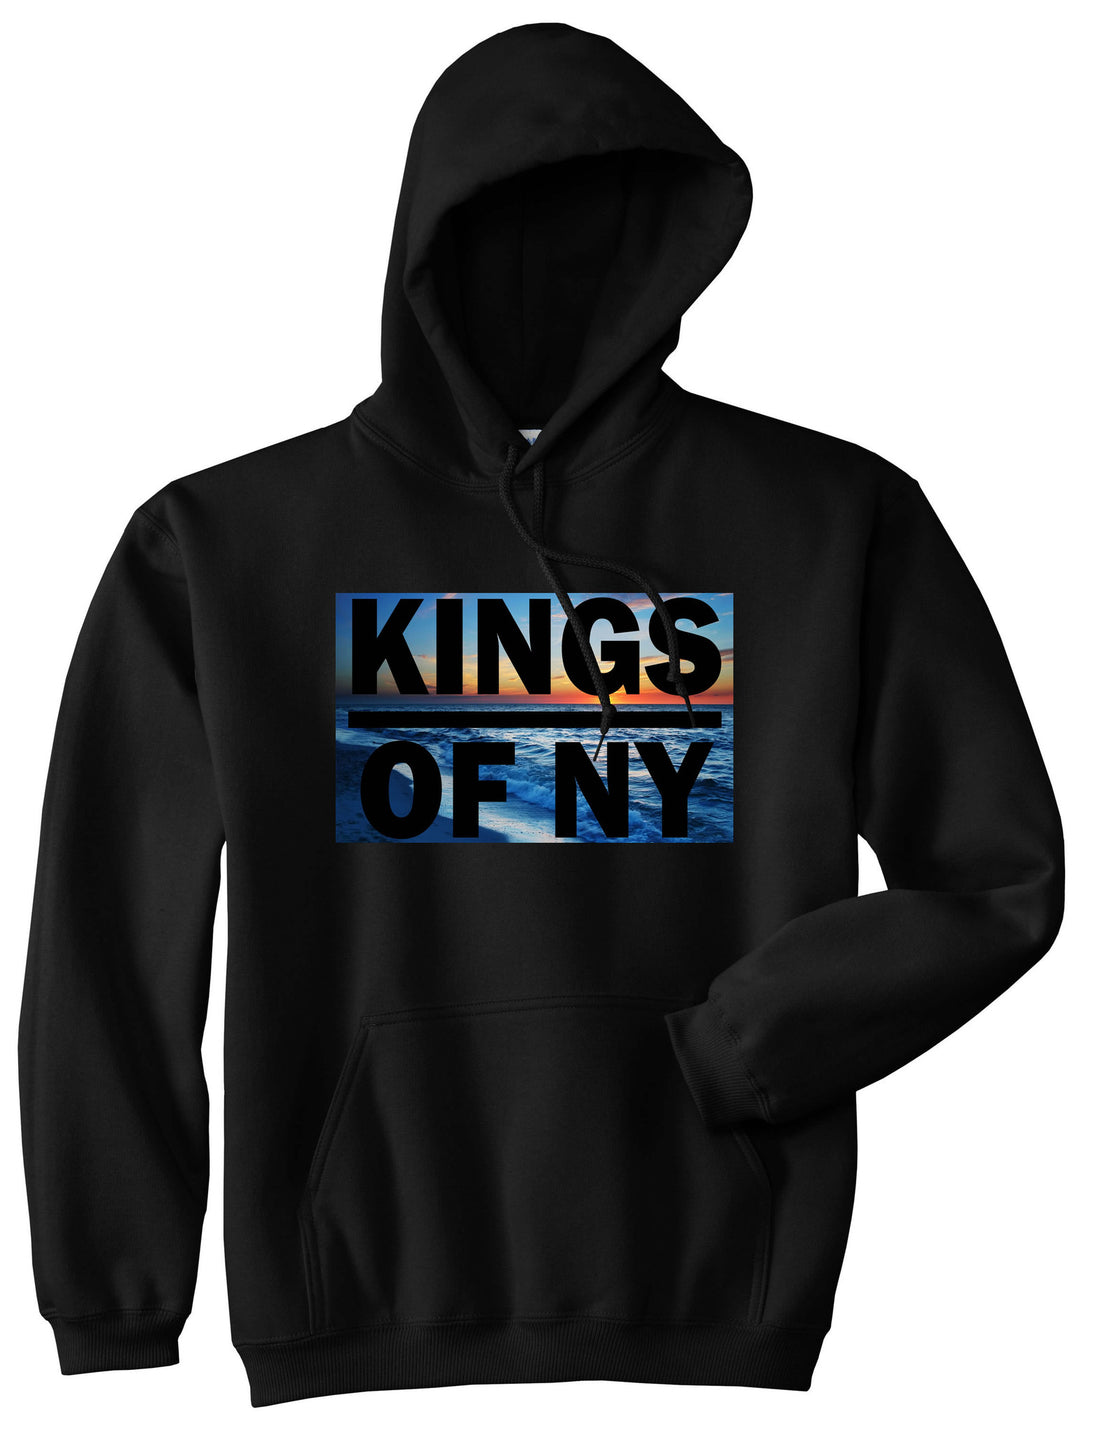 Sunset Logo Pullover Hoodie Hoody in Black by Kings Of NY